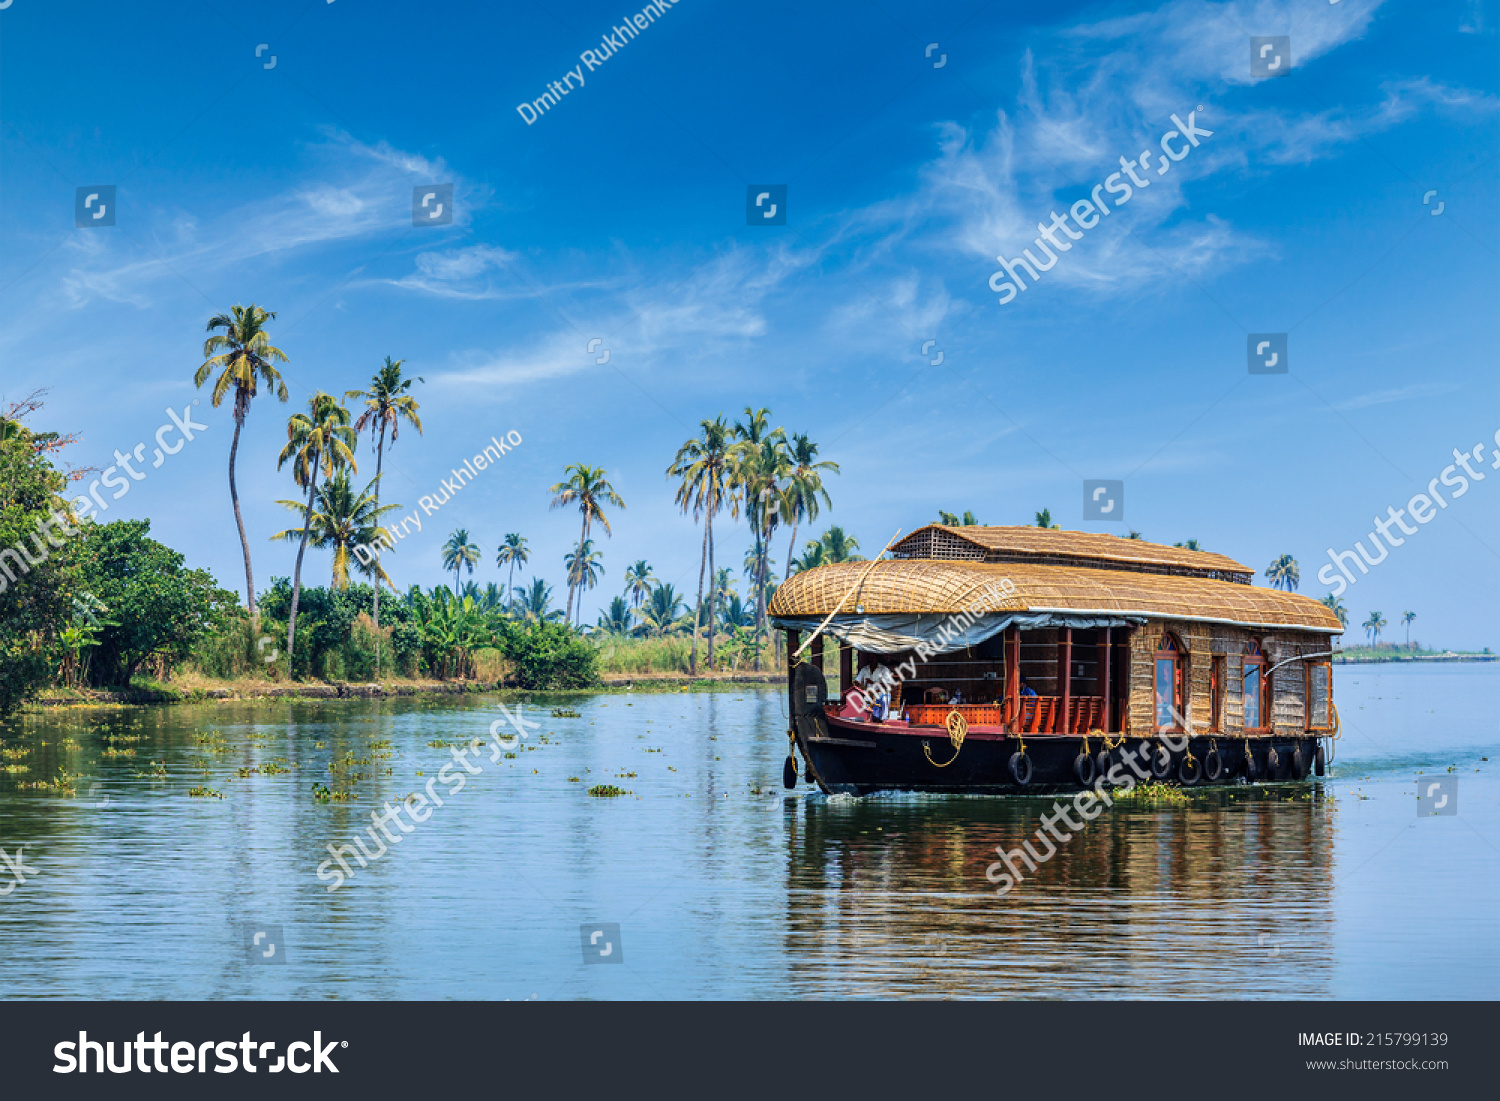 Travel tourism Kerala background - houseboat on Kerala backwaters. Kerala, India #215799139